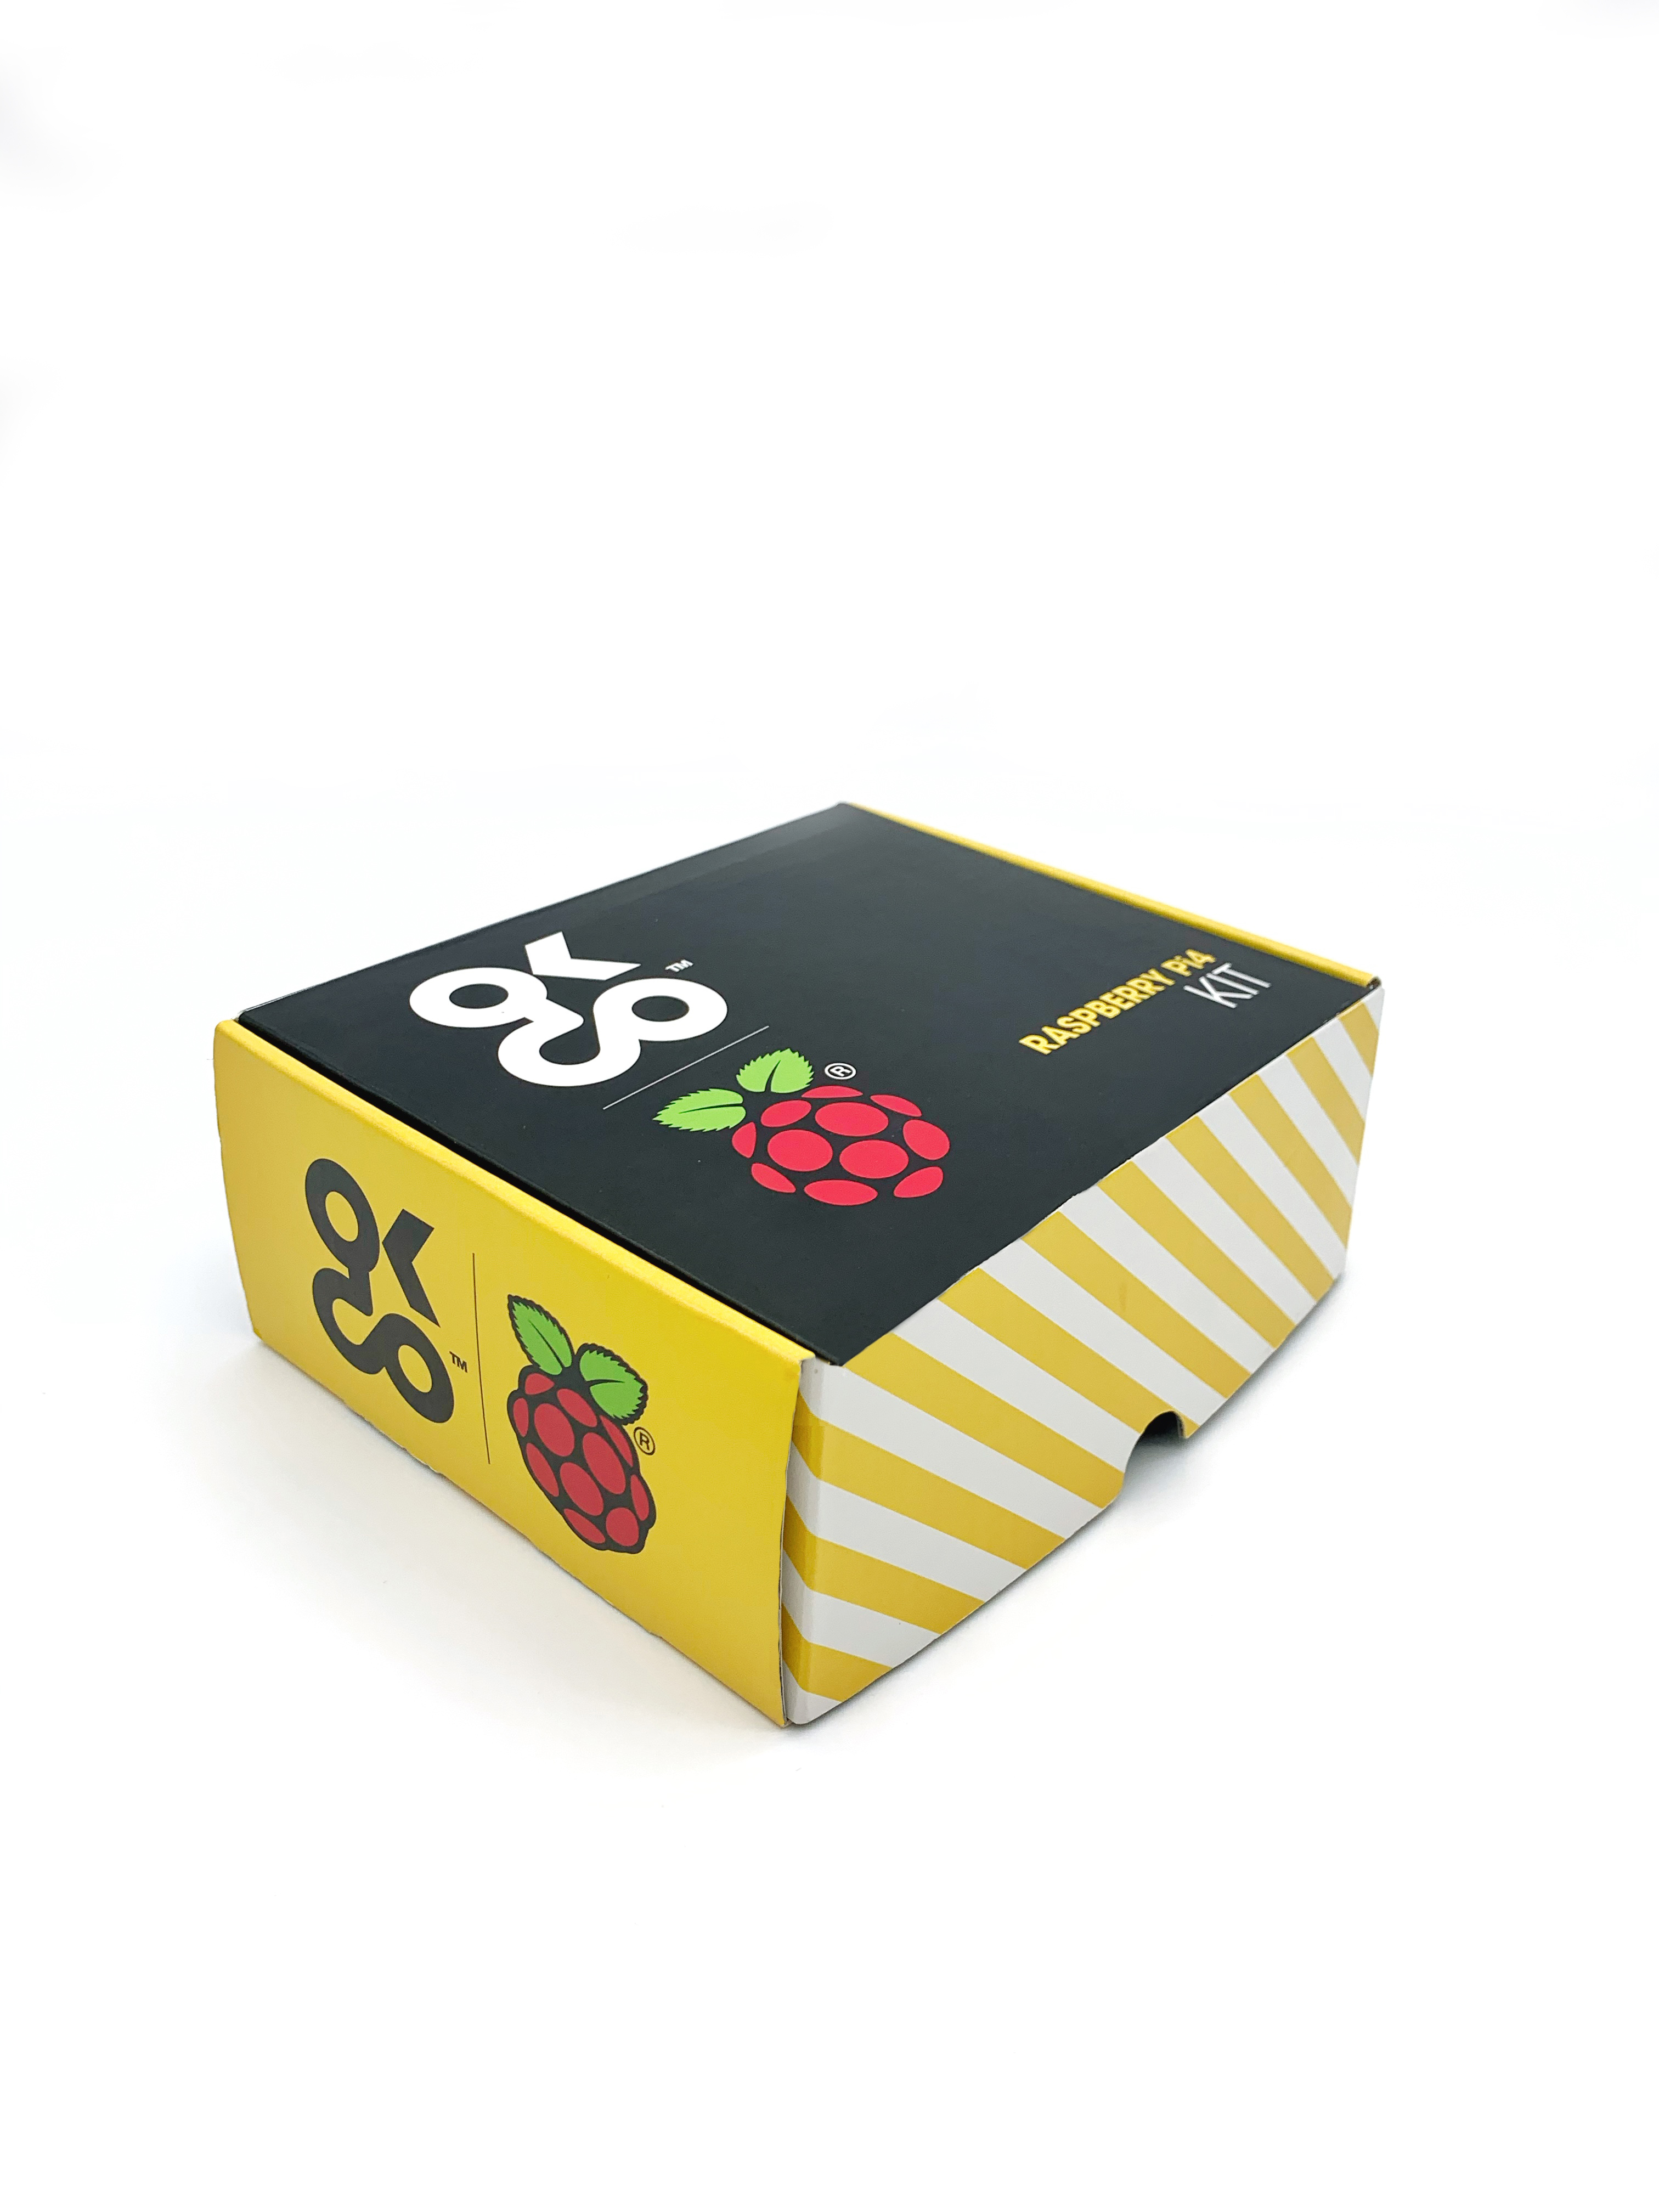 OKdo Raspberry Pi 4 8GB Essential Starter Kit with Universal Power 